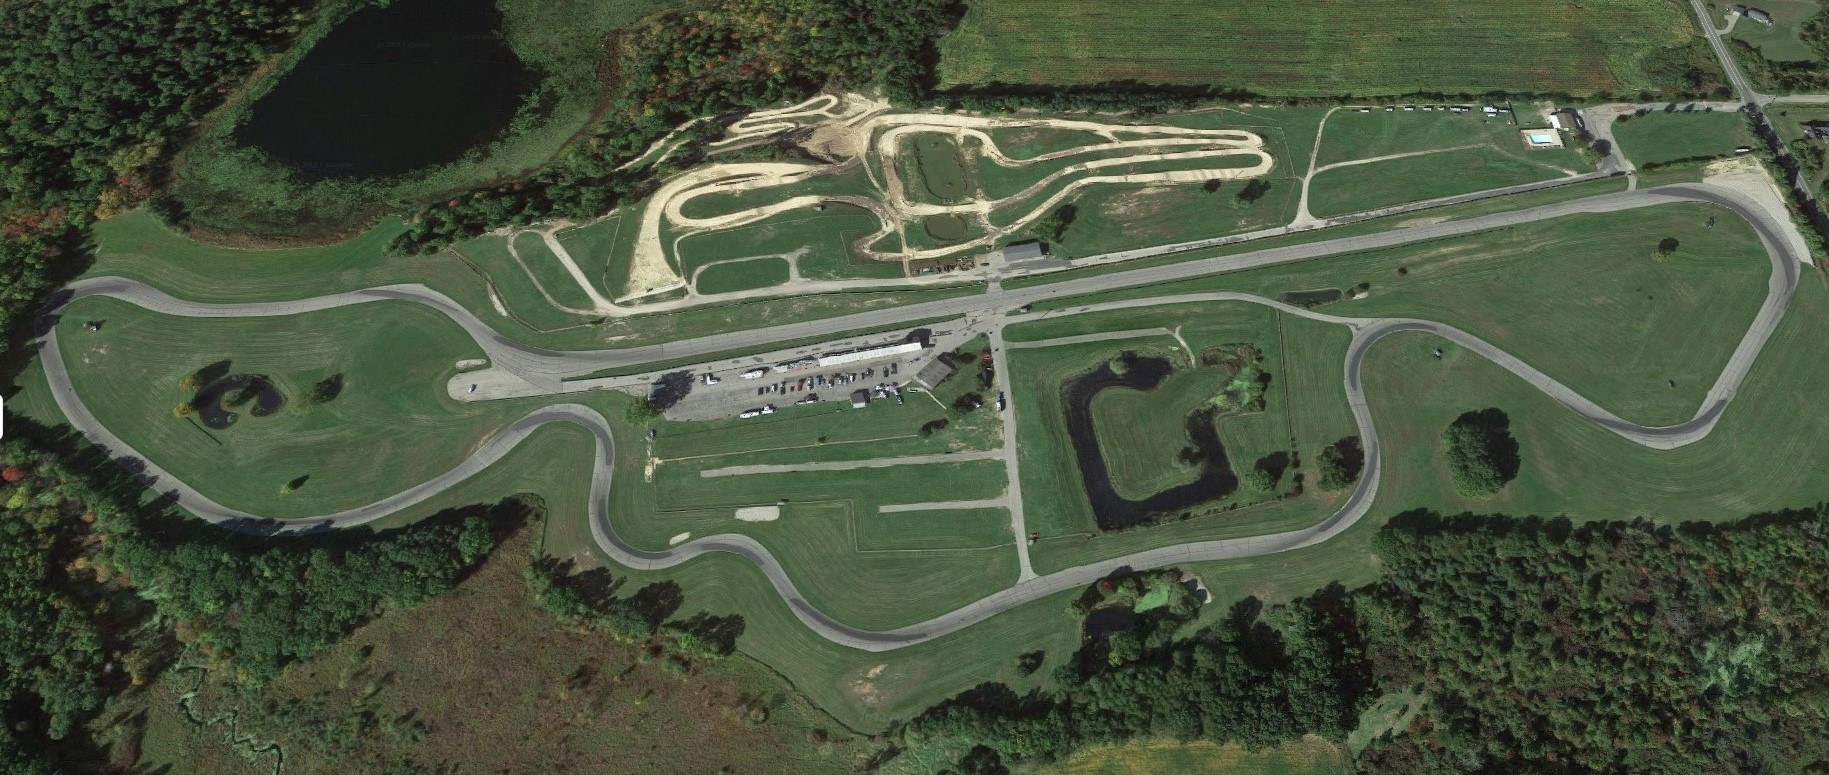 Grattan Raceway Park, near Grand Rapids, Michigan. Photo courtesy Signature Associates.